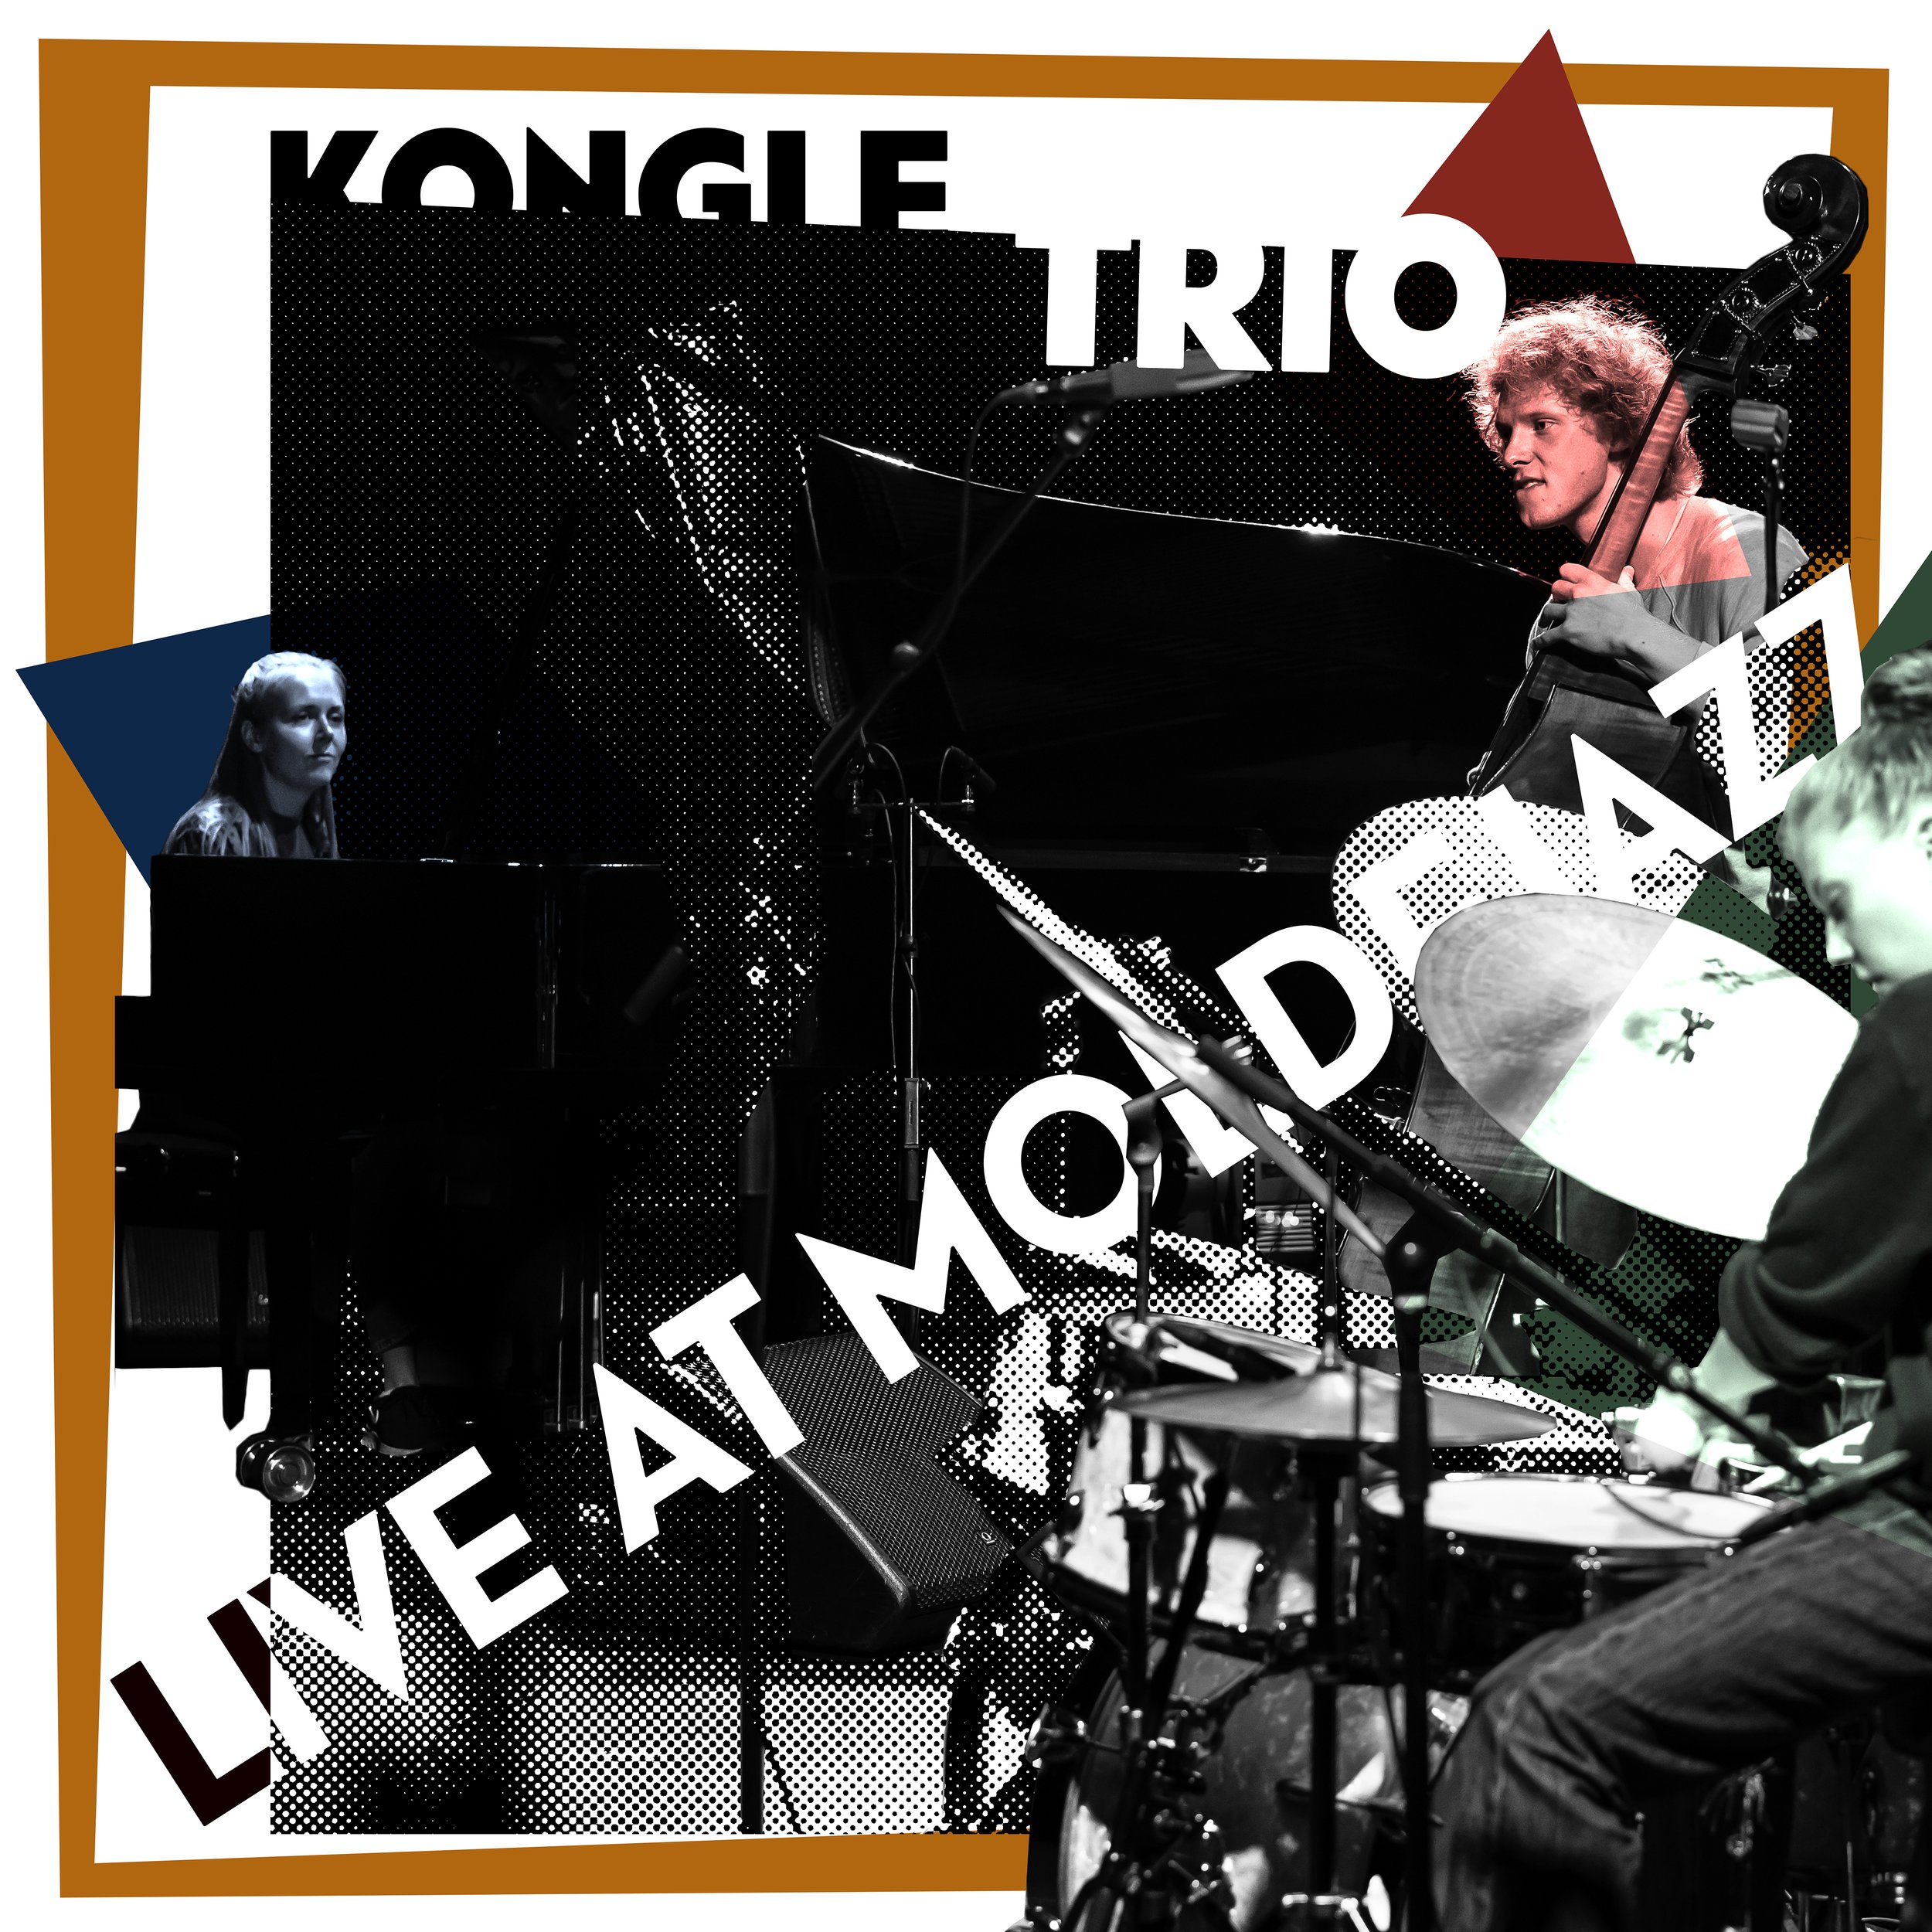 Kongle Trio_Digital cover.jpg